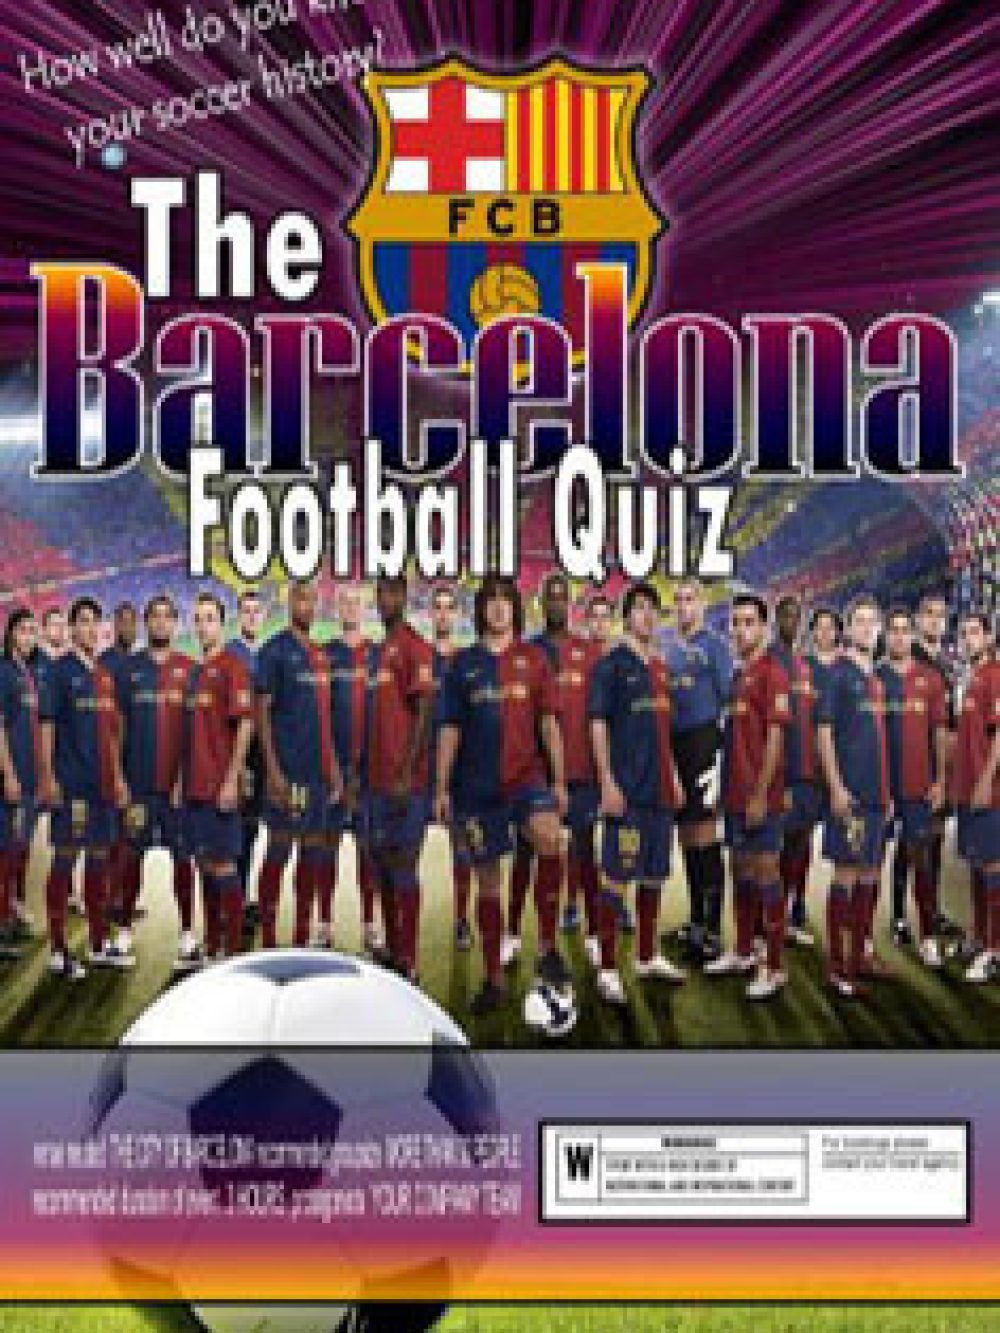 barcelona_football_quiz_vertical_web